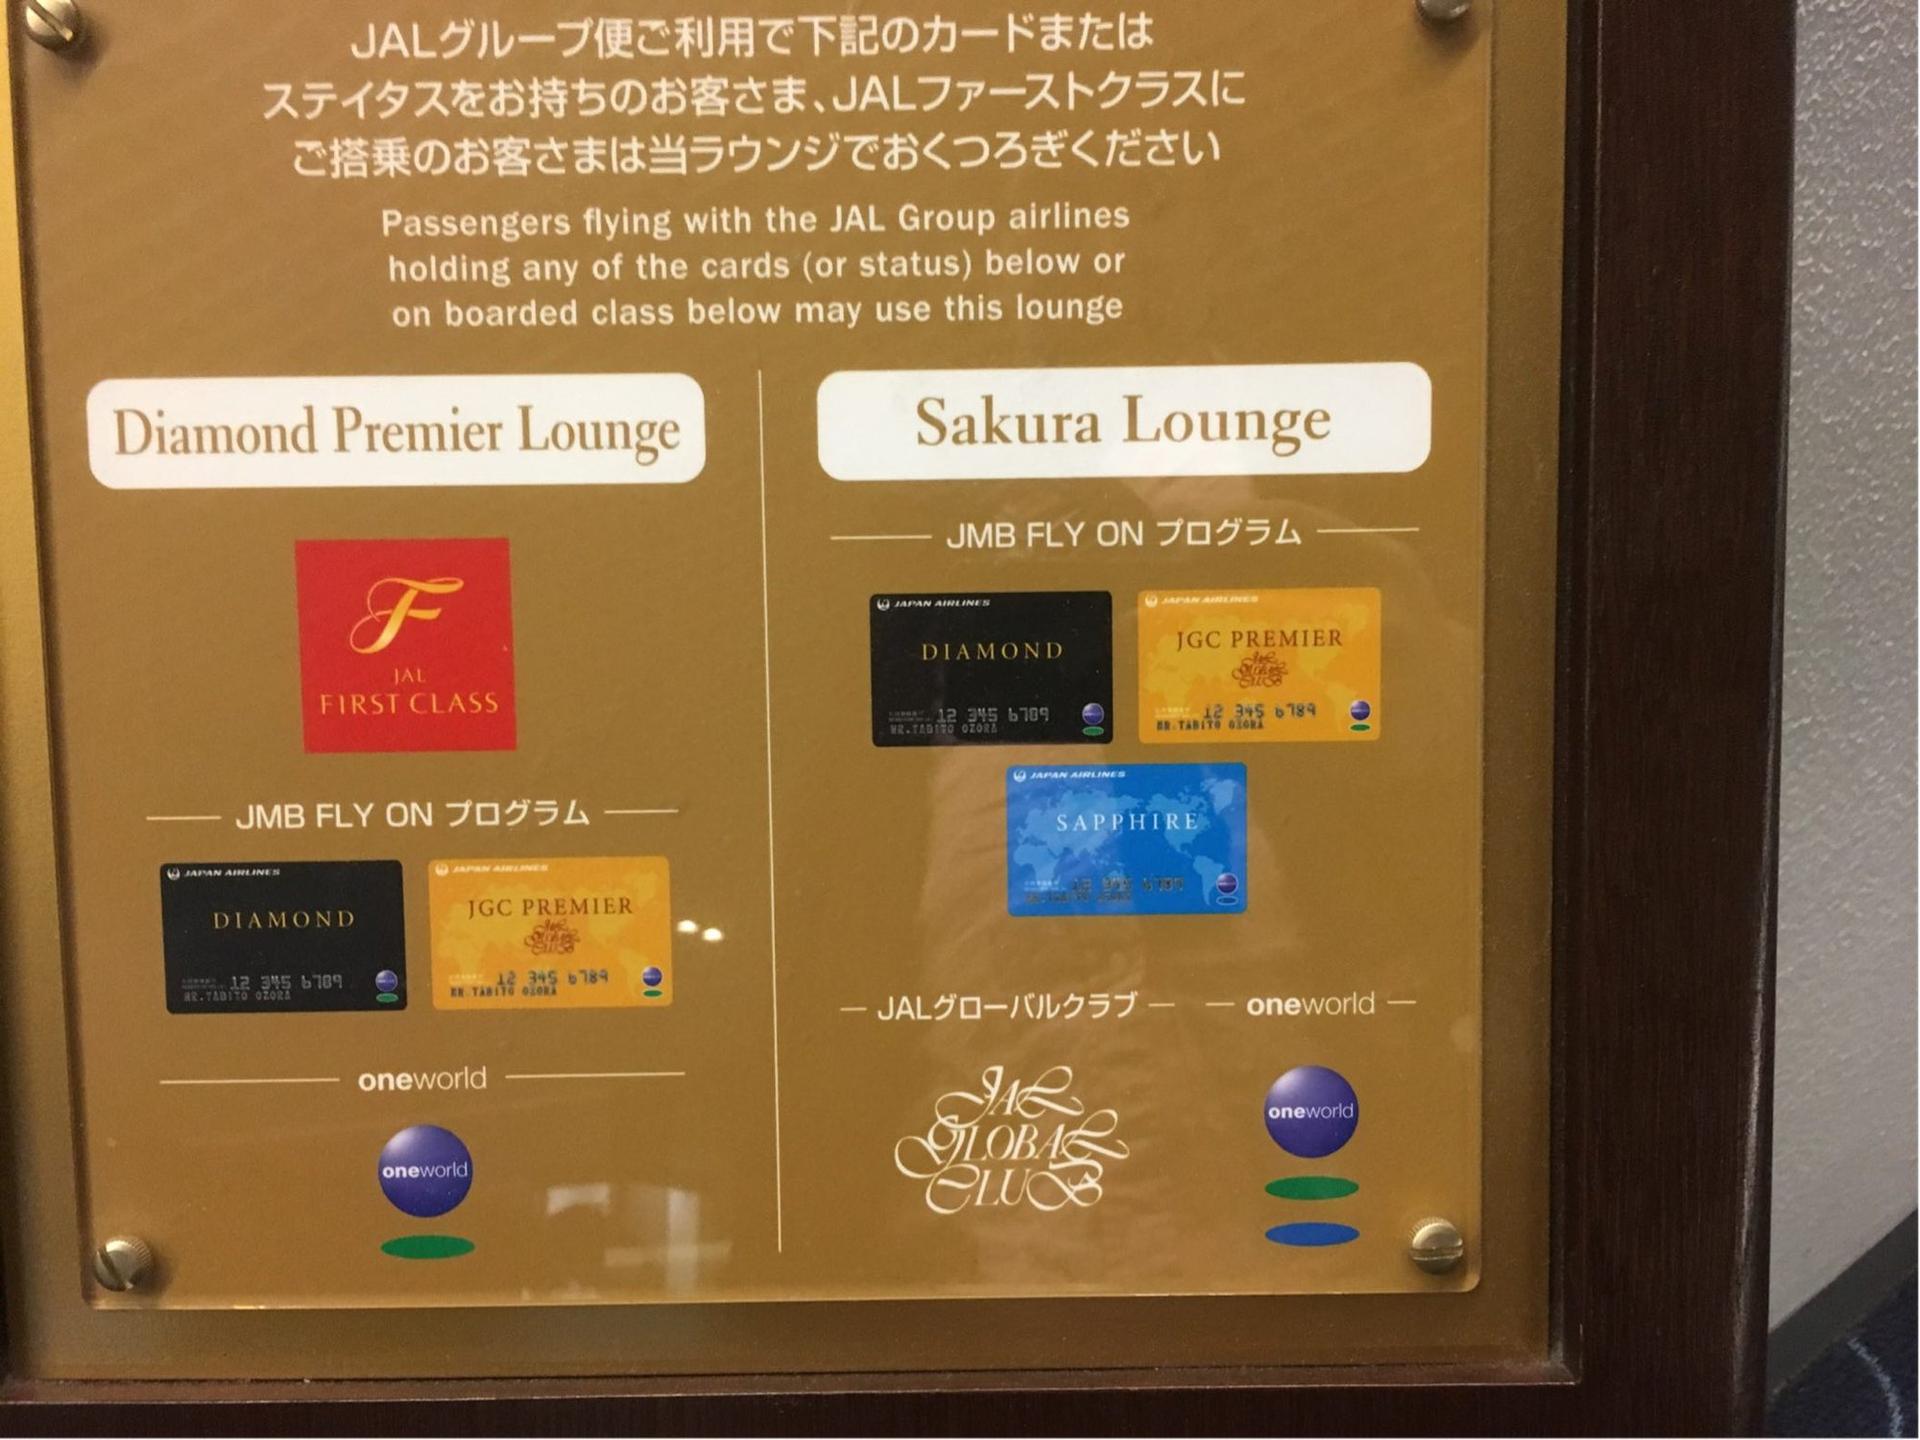 Japan Airlines JAL Sakura Lounge (South Wing) image 1 of 2